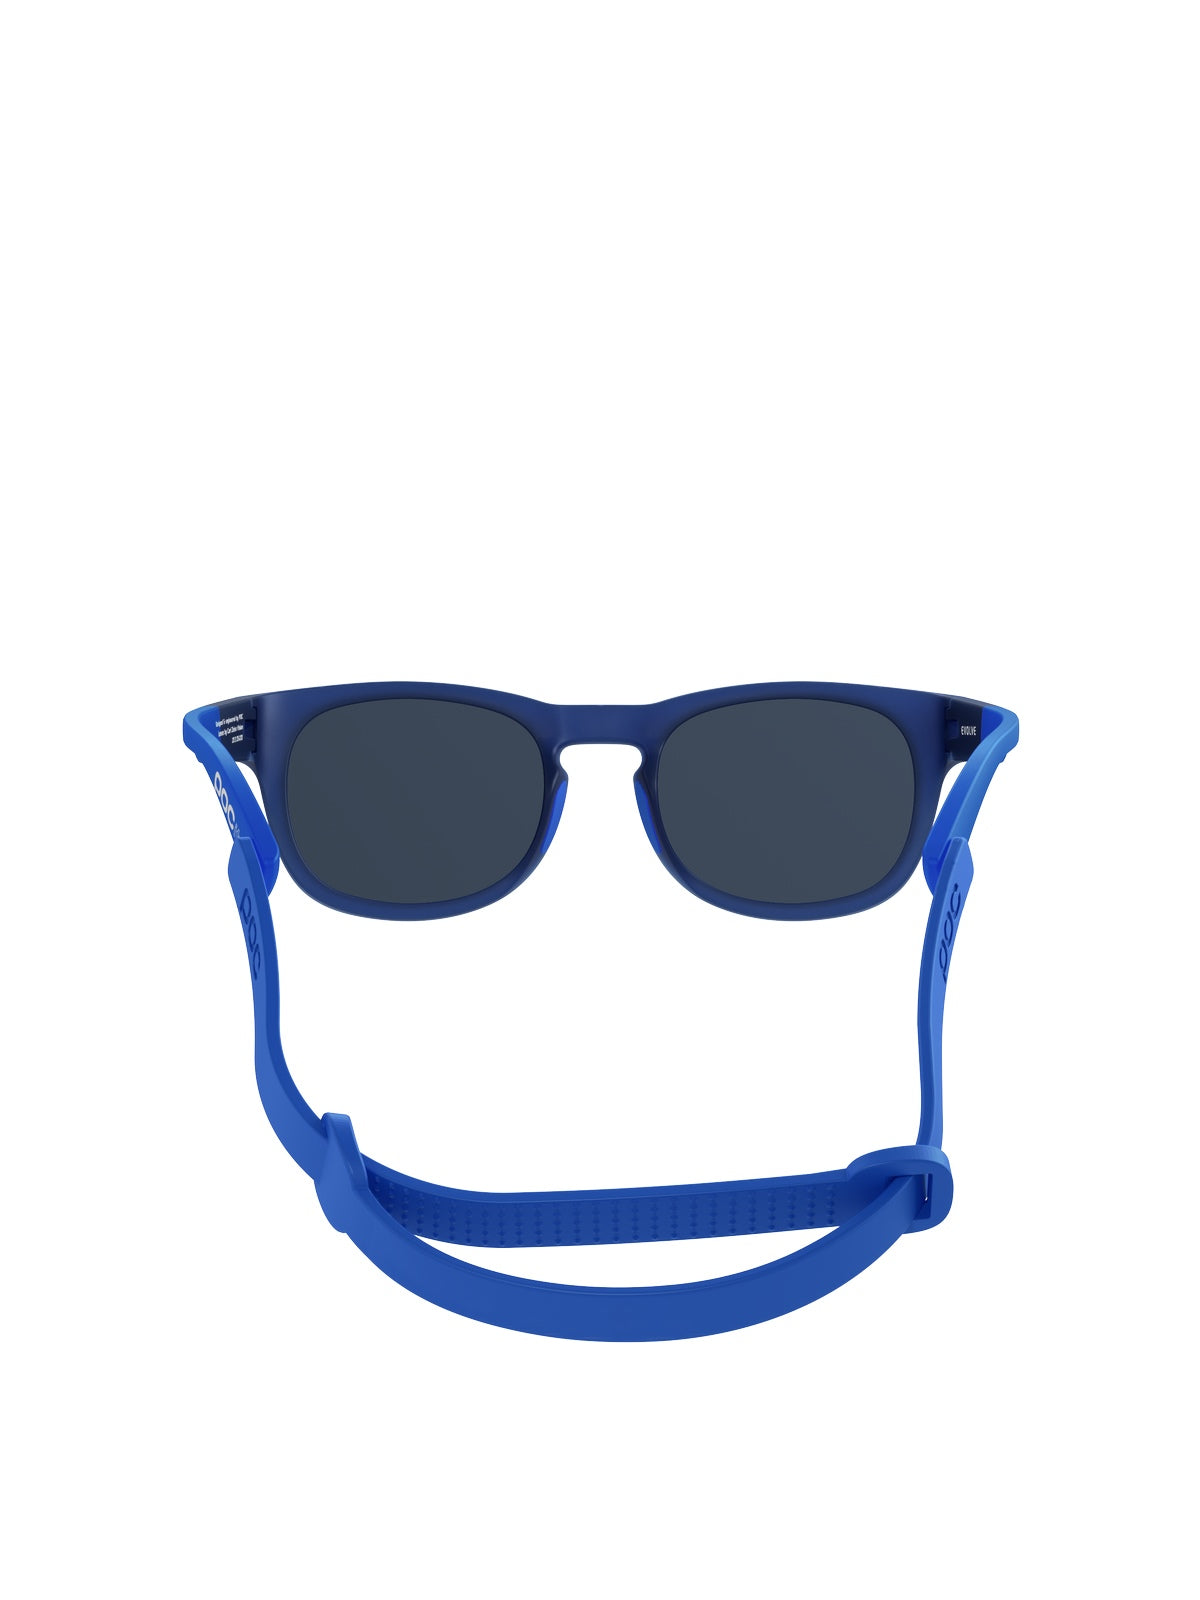 Okulary przeciwsłoneczne POCito Evolve - Lead Blue/Fluo. Blue